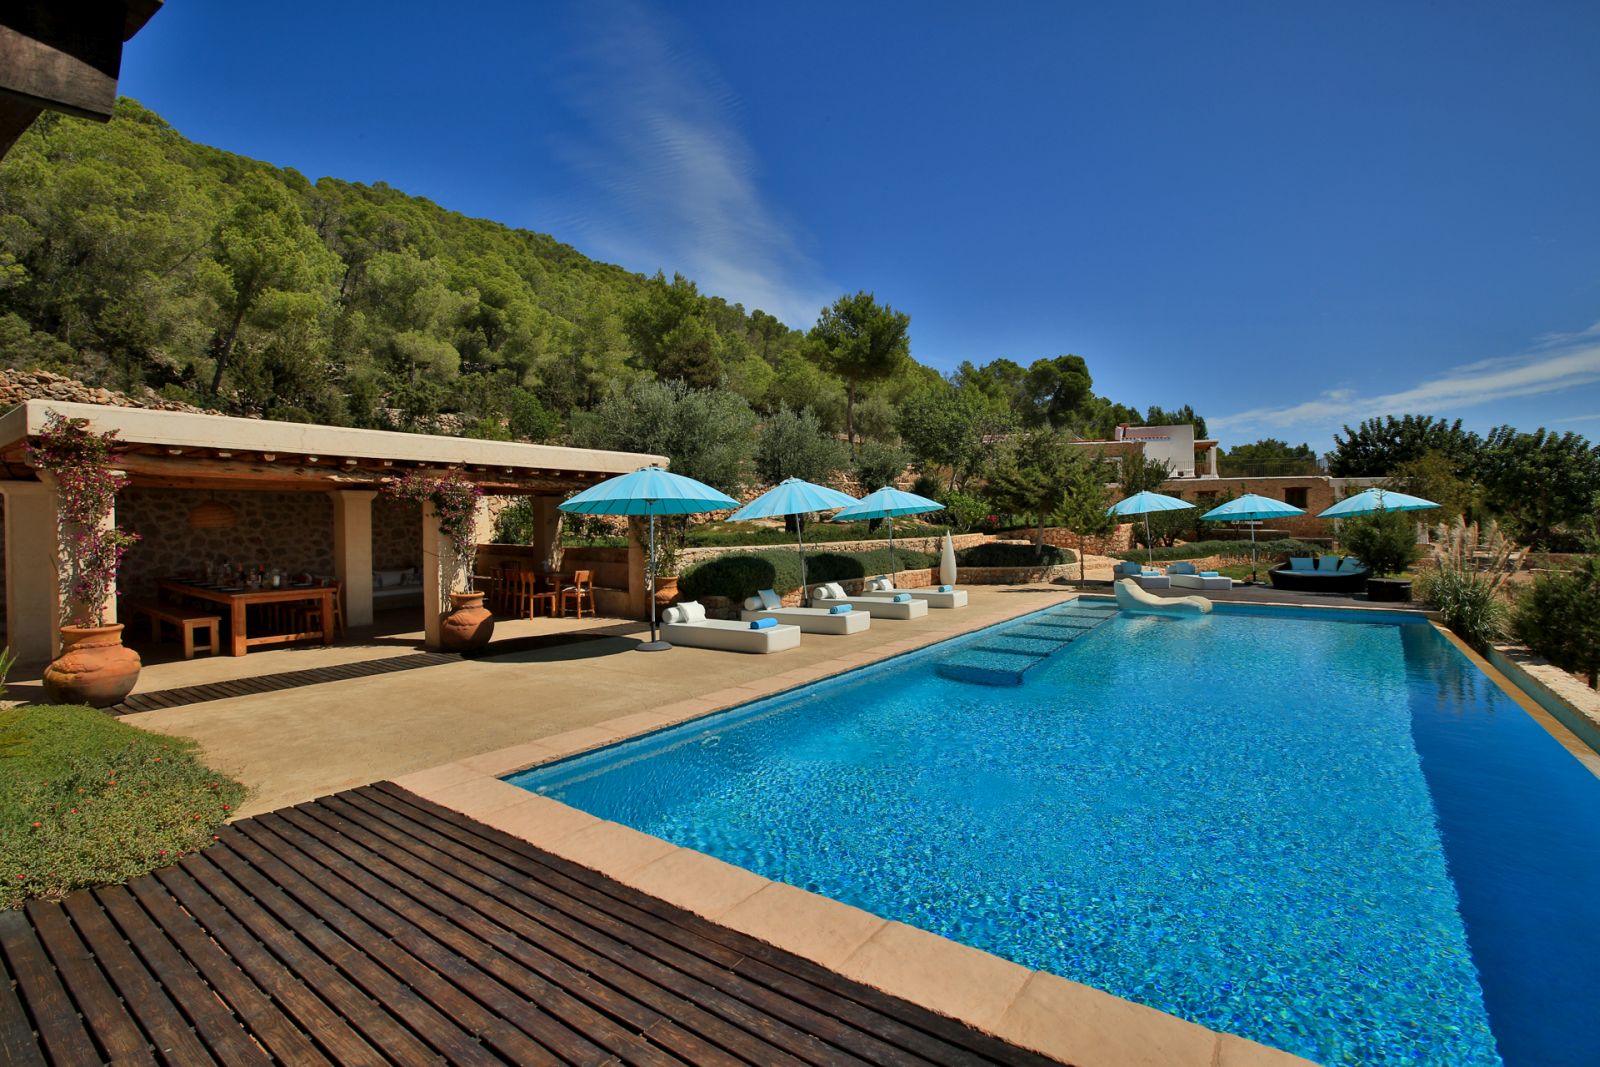 the swimming pool at the villa